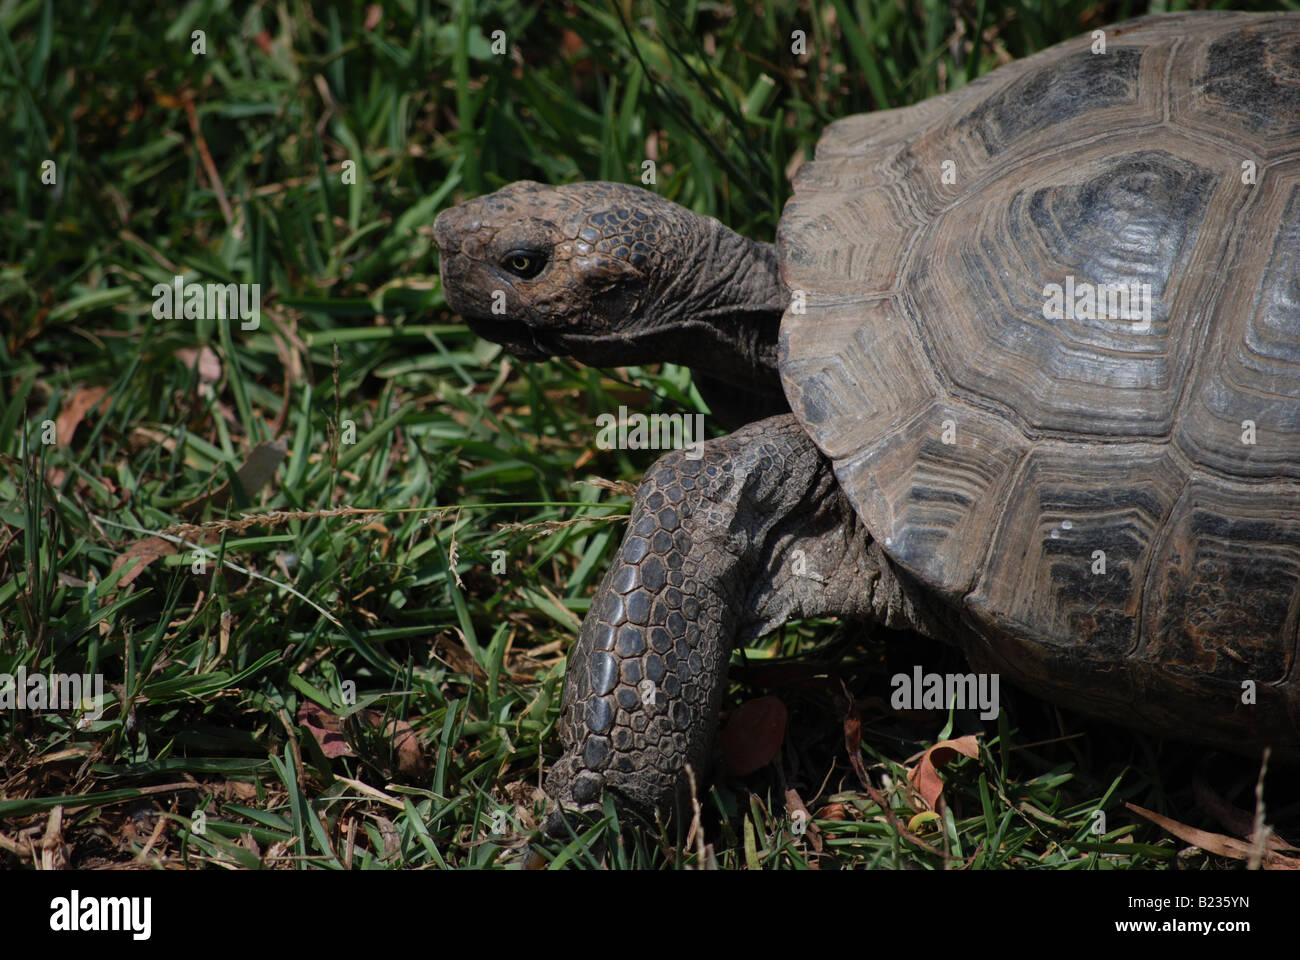 Close-up of Desert Tortoise (Gopherus agassizii) on grass Stock Photo